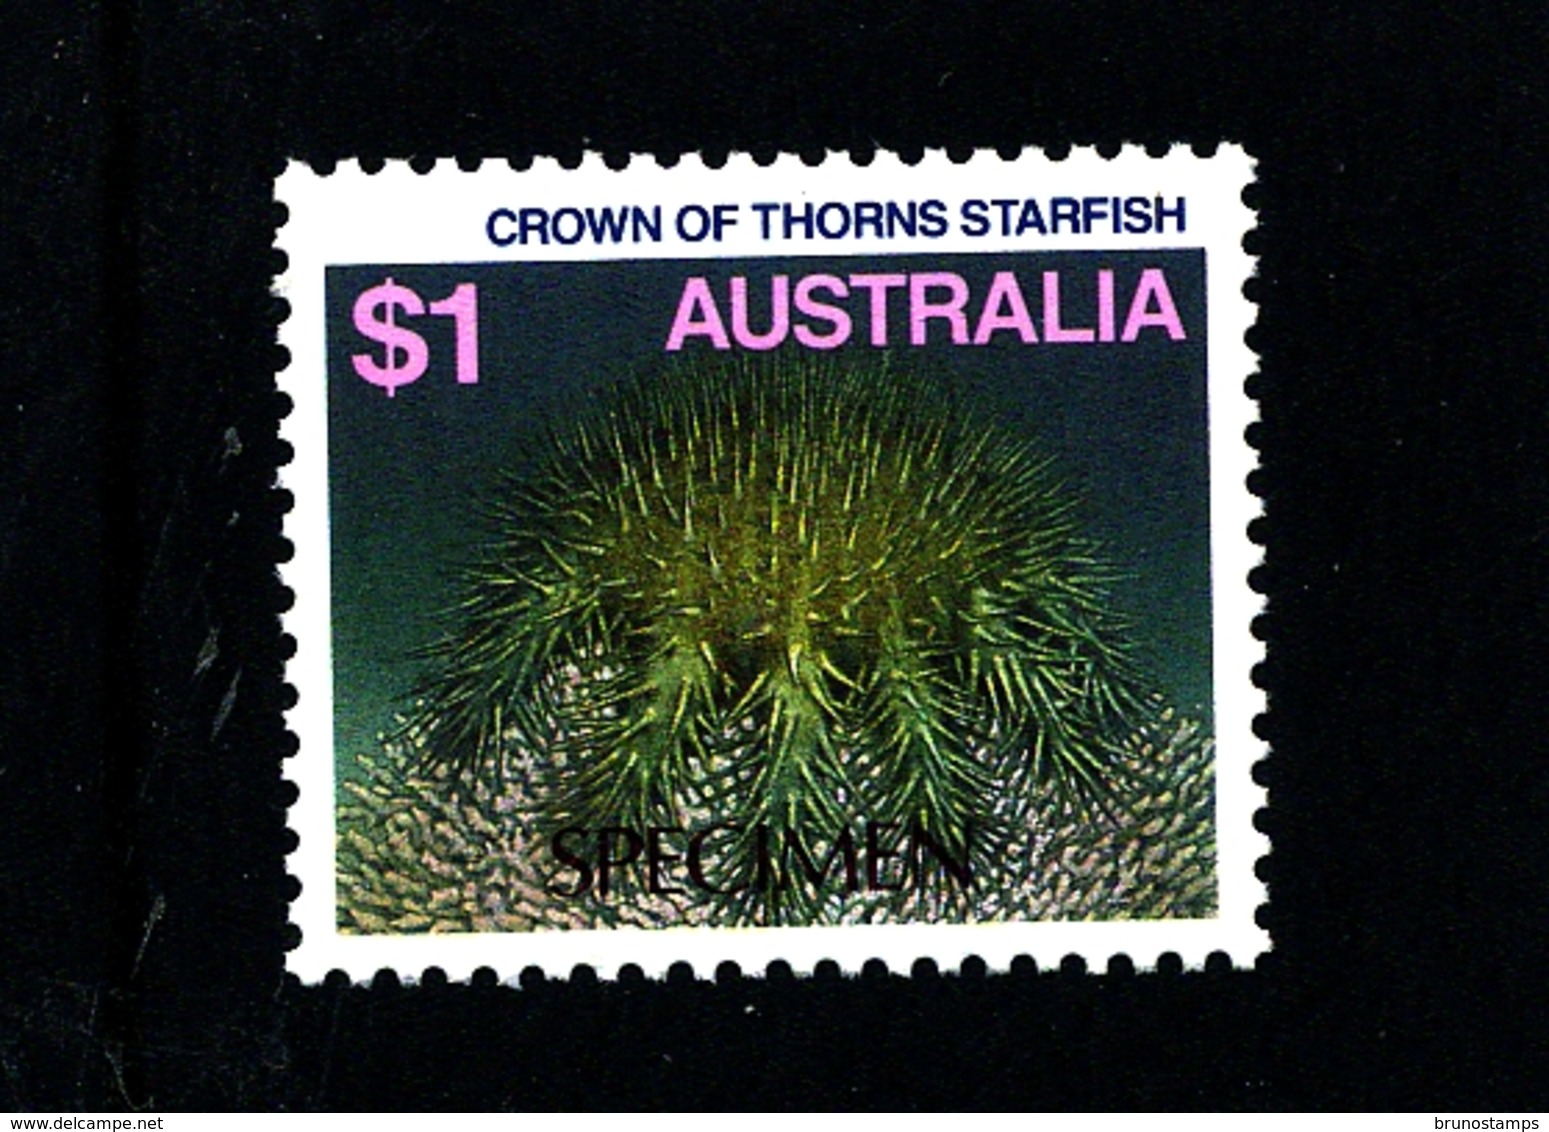 AUSTRALIA - 1988  $ 1  CROWN OF THORNS  STARFISH  SPECIMEN  OVERPRINTED  MINT NH - Abarten Und Kuriositäten